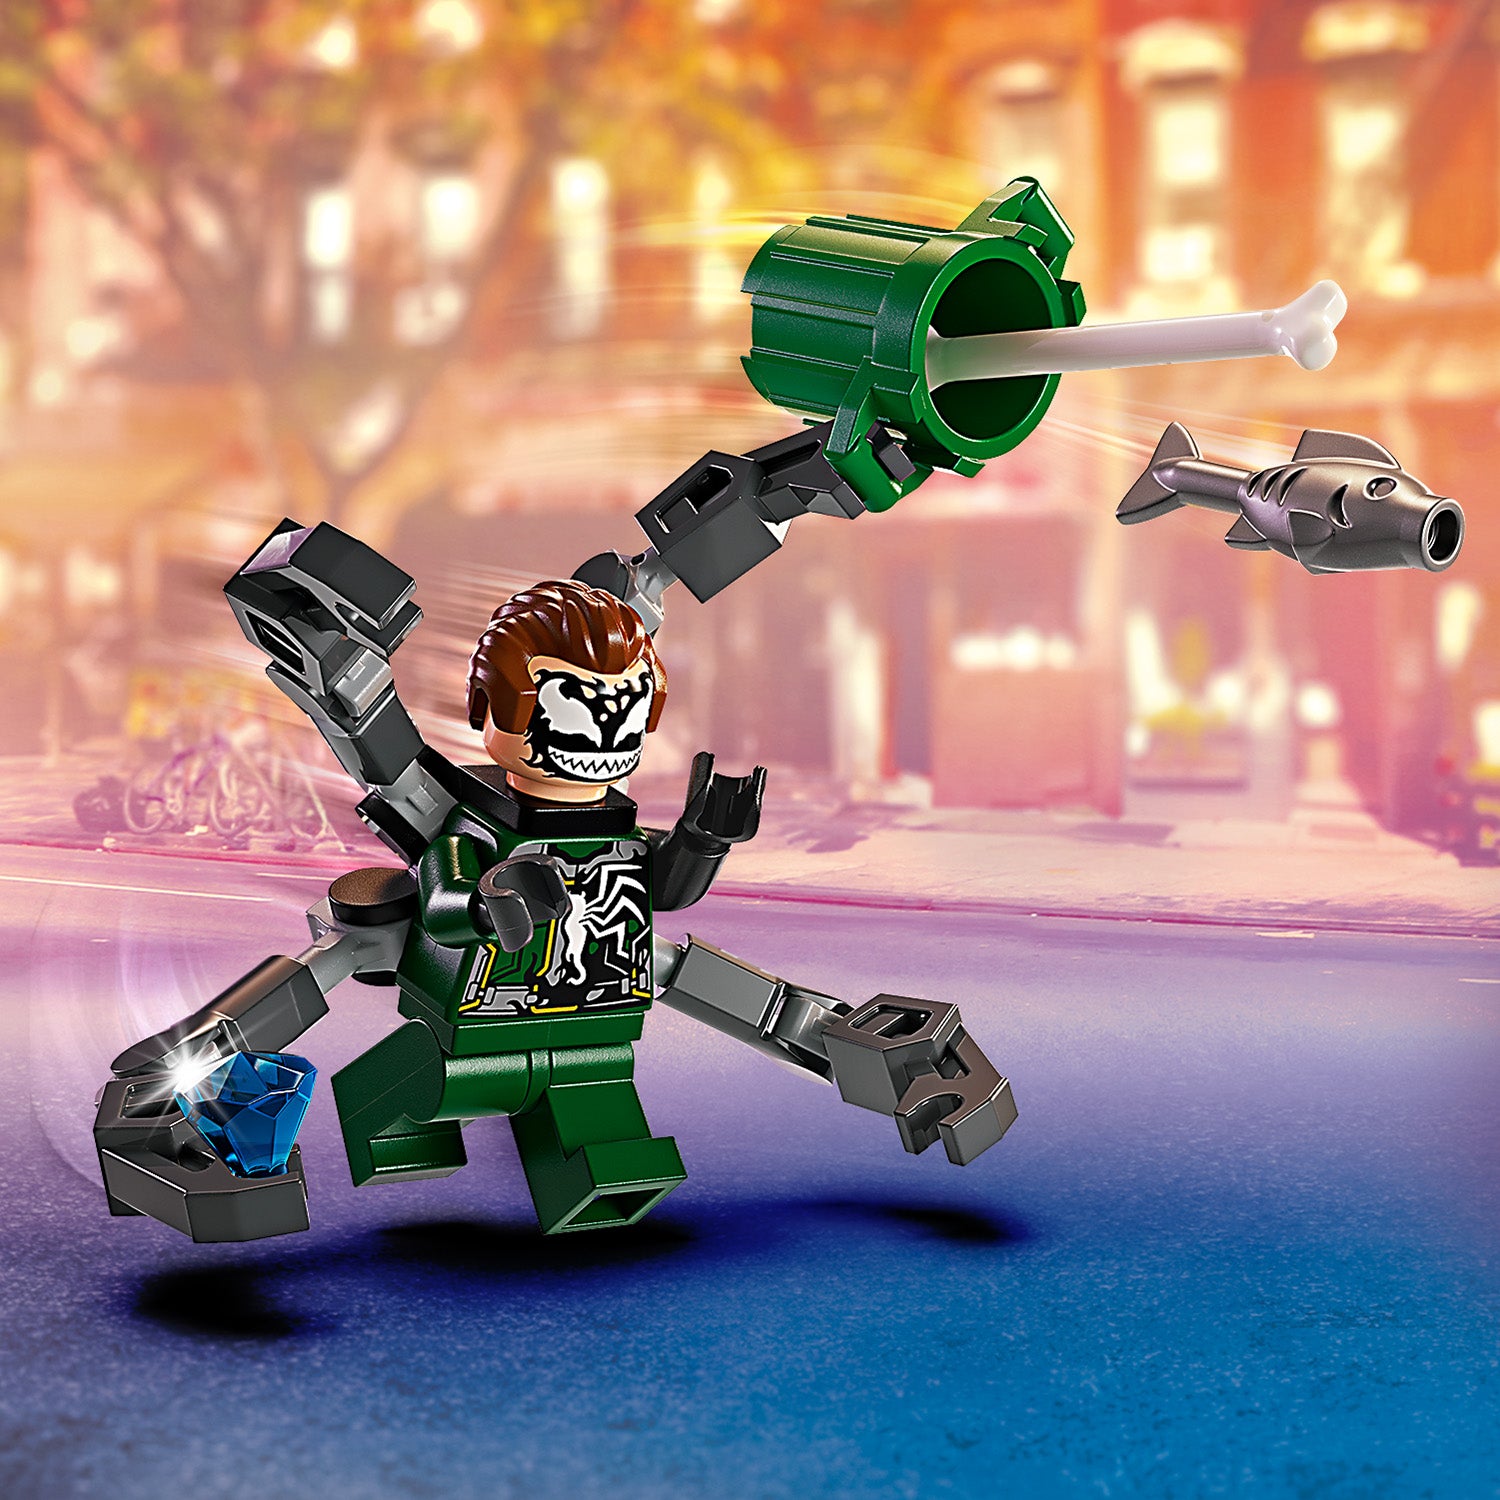 Lego 76275 Motorcycle Chase Spider-Man Vs Doc Ock